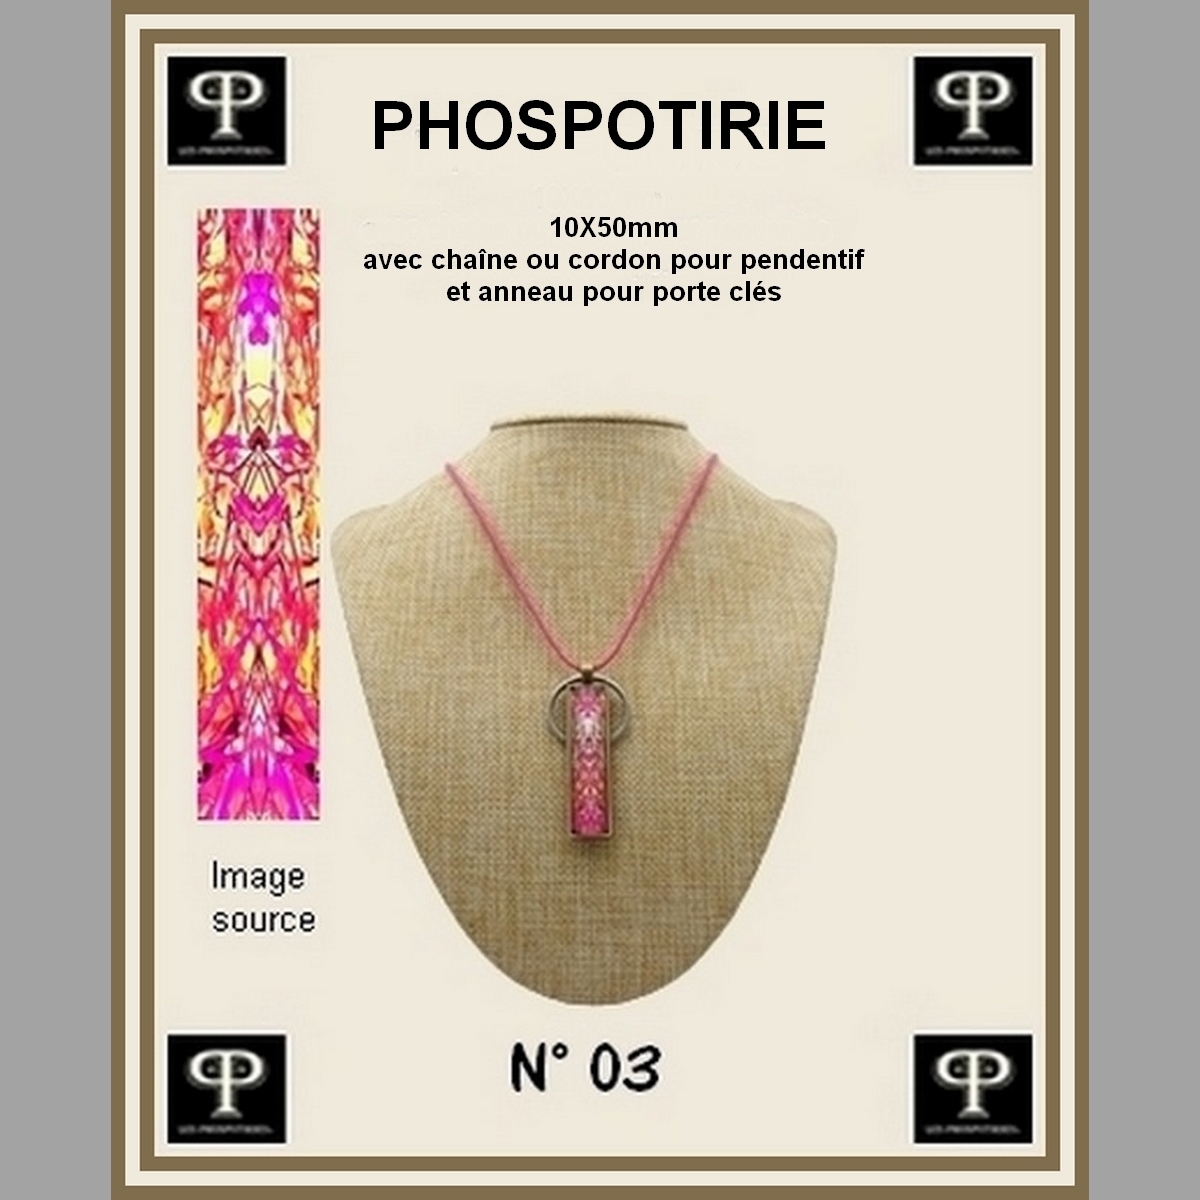 Phospotirie version TOTEM 10X50 mm N°03 pour pendentifs ou porte-clés